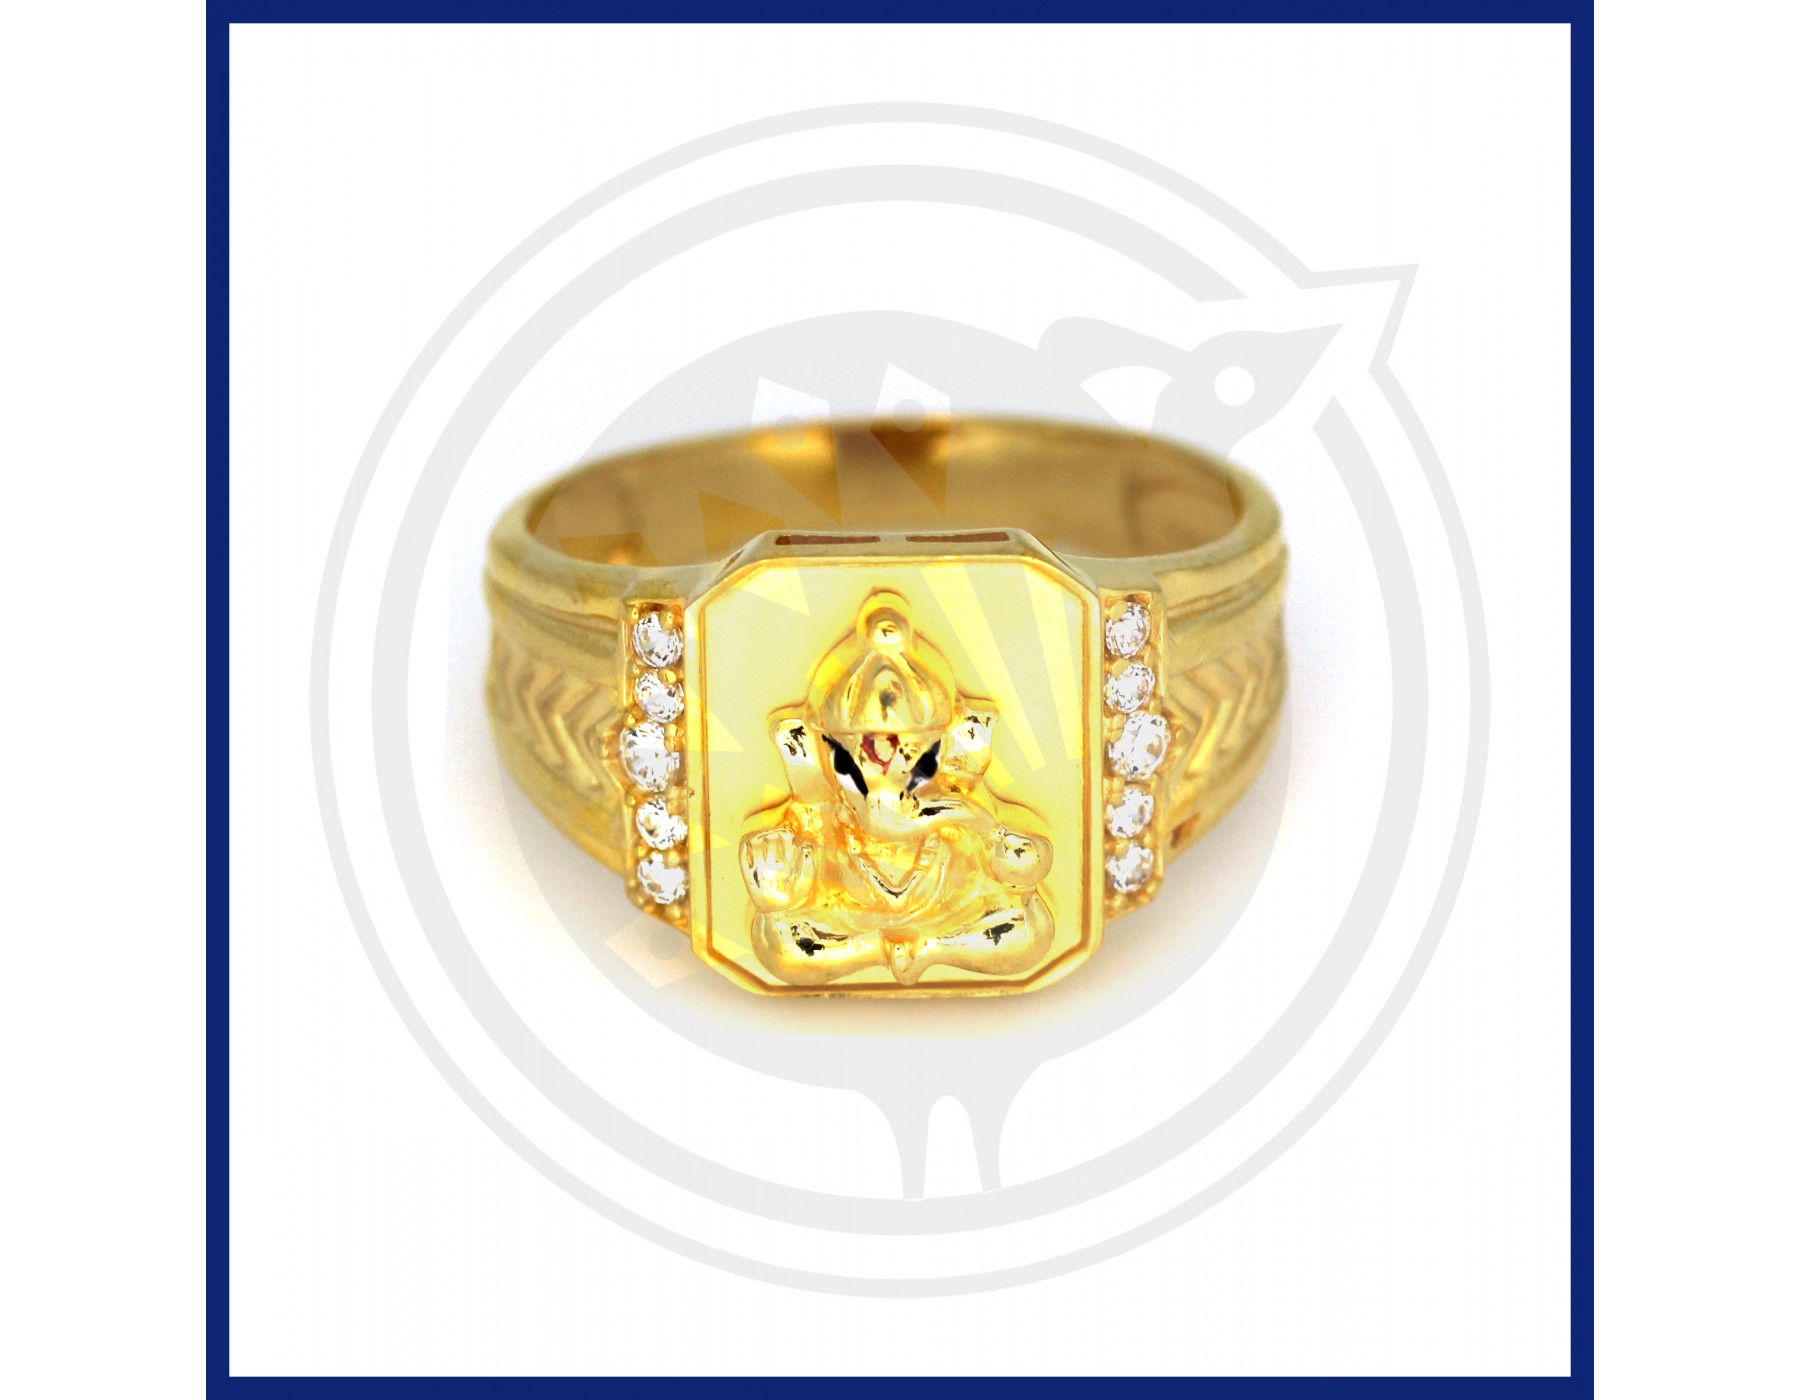 Trillobeat Jewellery - Lord Ganesha ring. Silver with gold accent and white  jade. #ganesha #lordganesha #hindugods #ganesharing #elephantart  #elephantring #trillobeat | Facebook